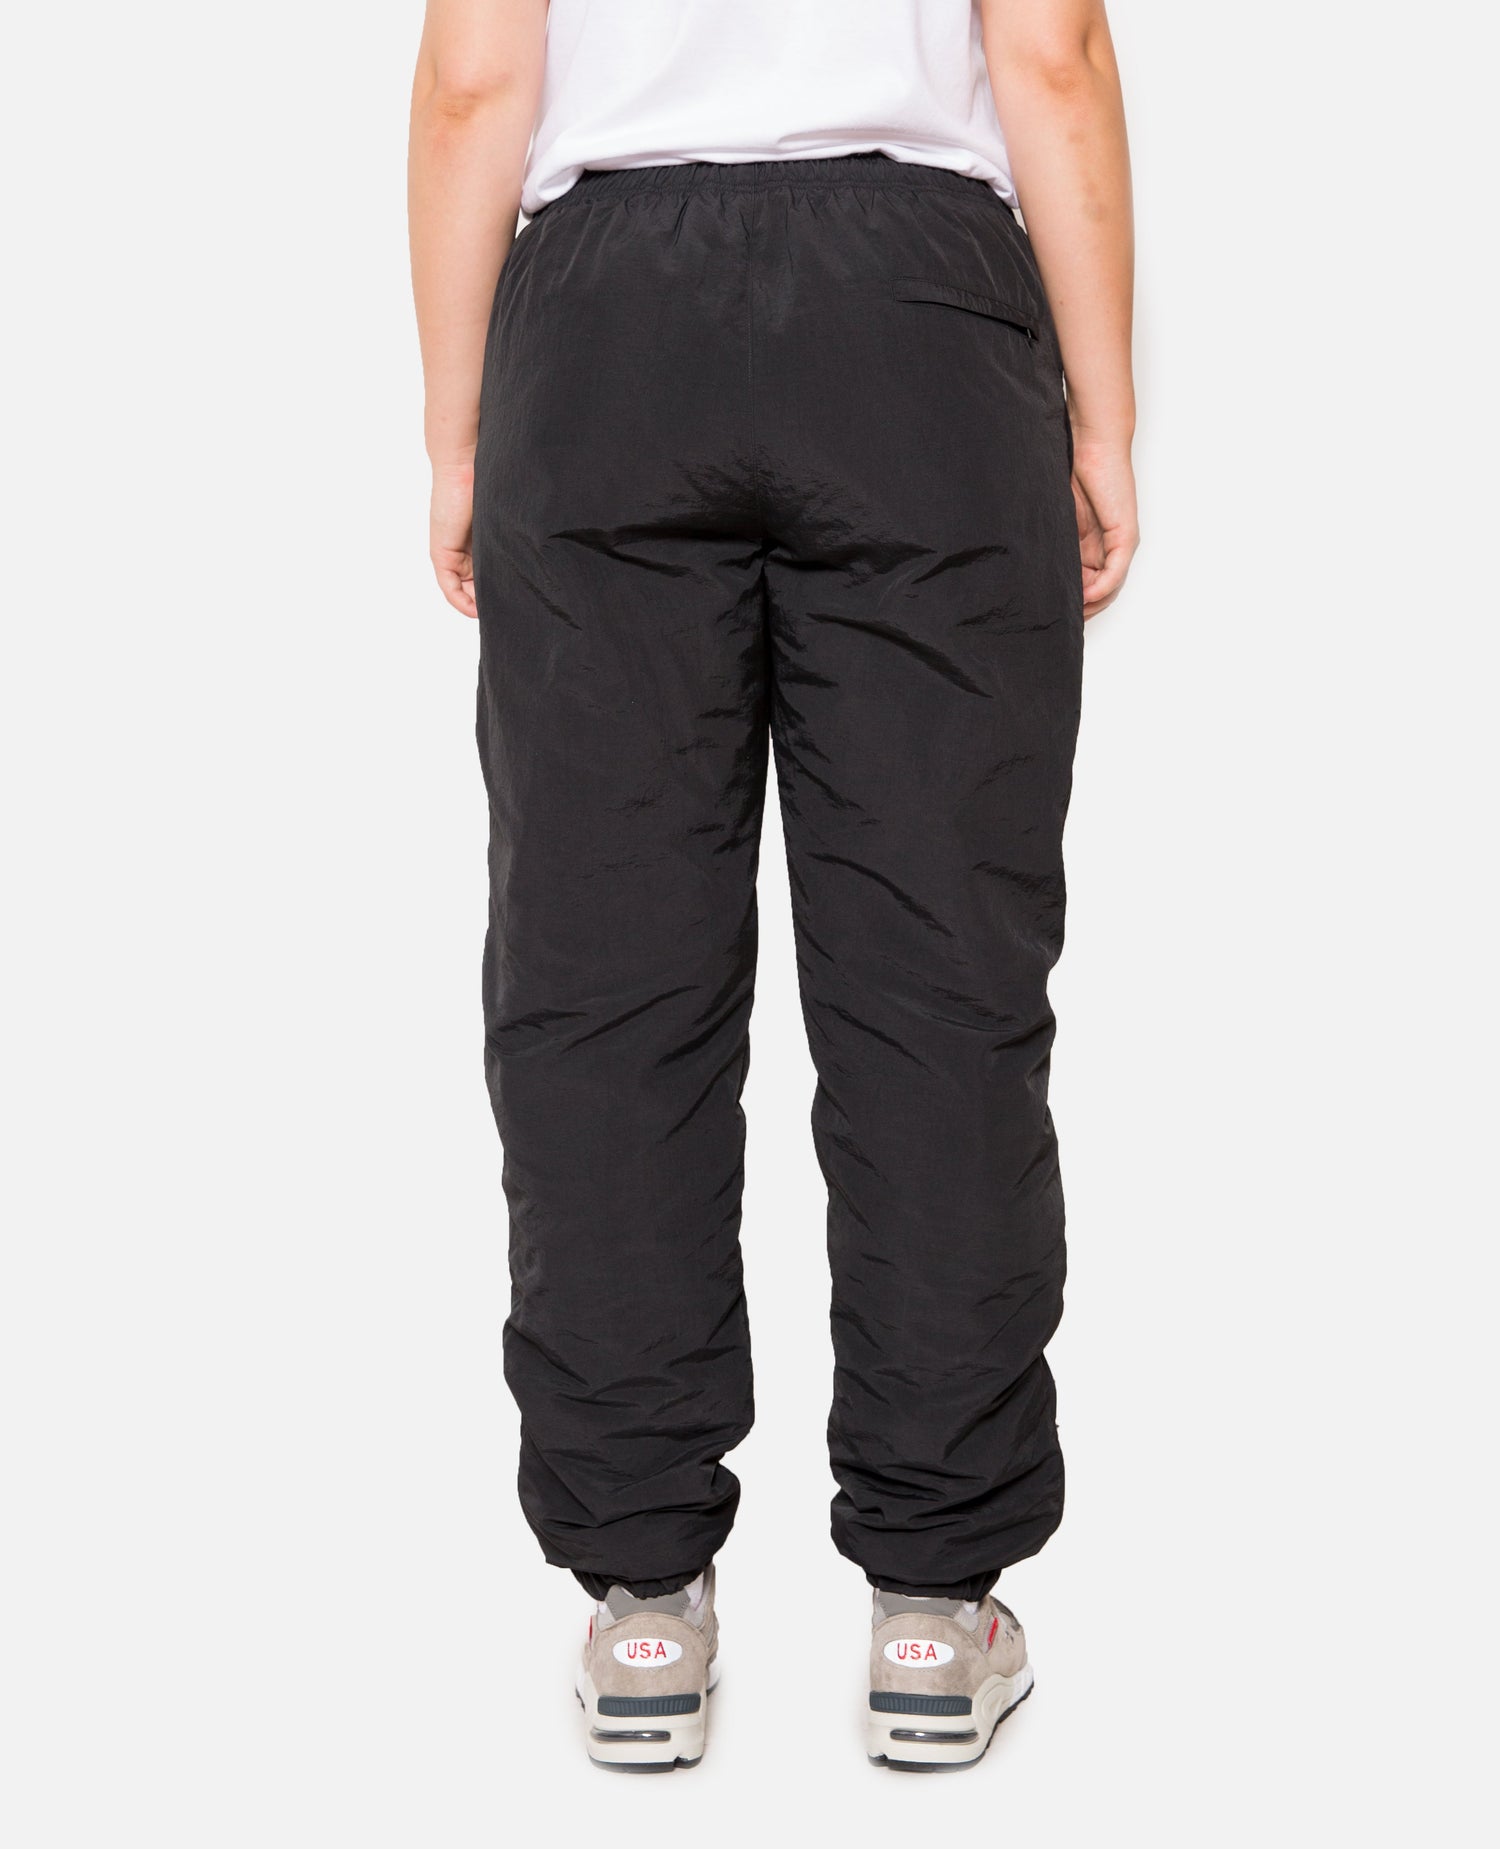 Patta Basic Nylon Padded Track Pants (Black)